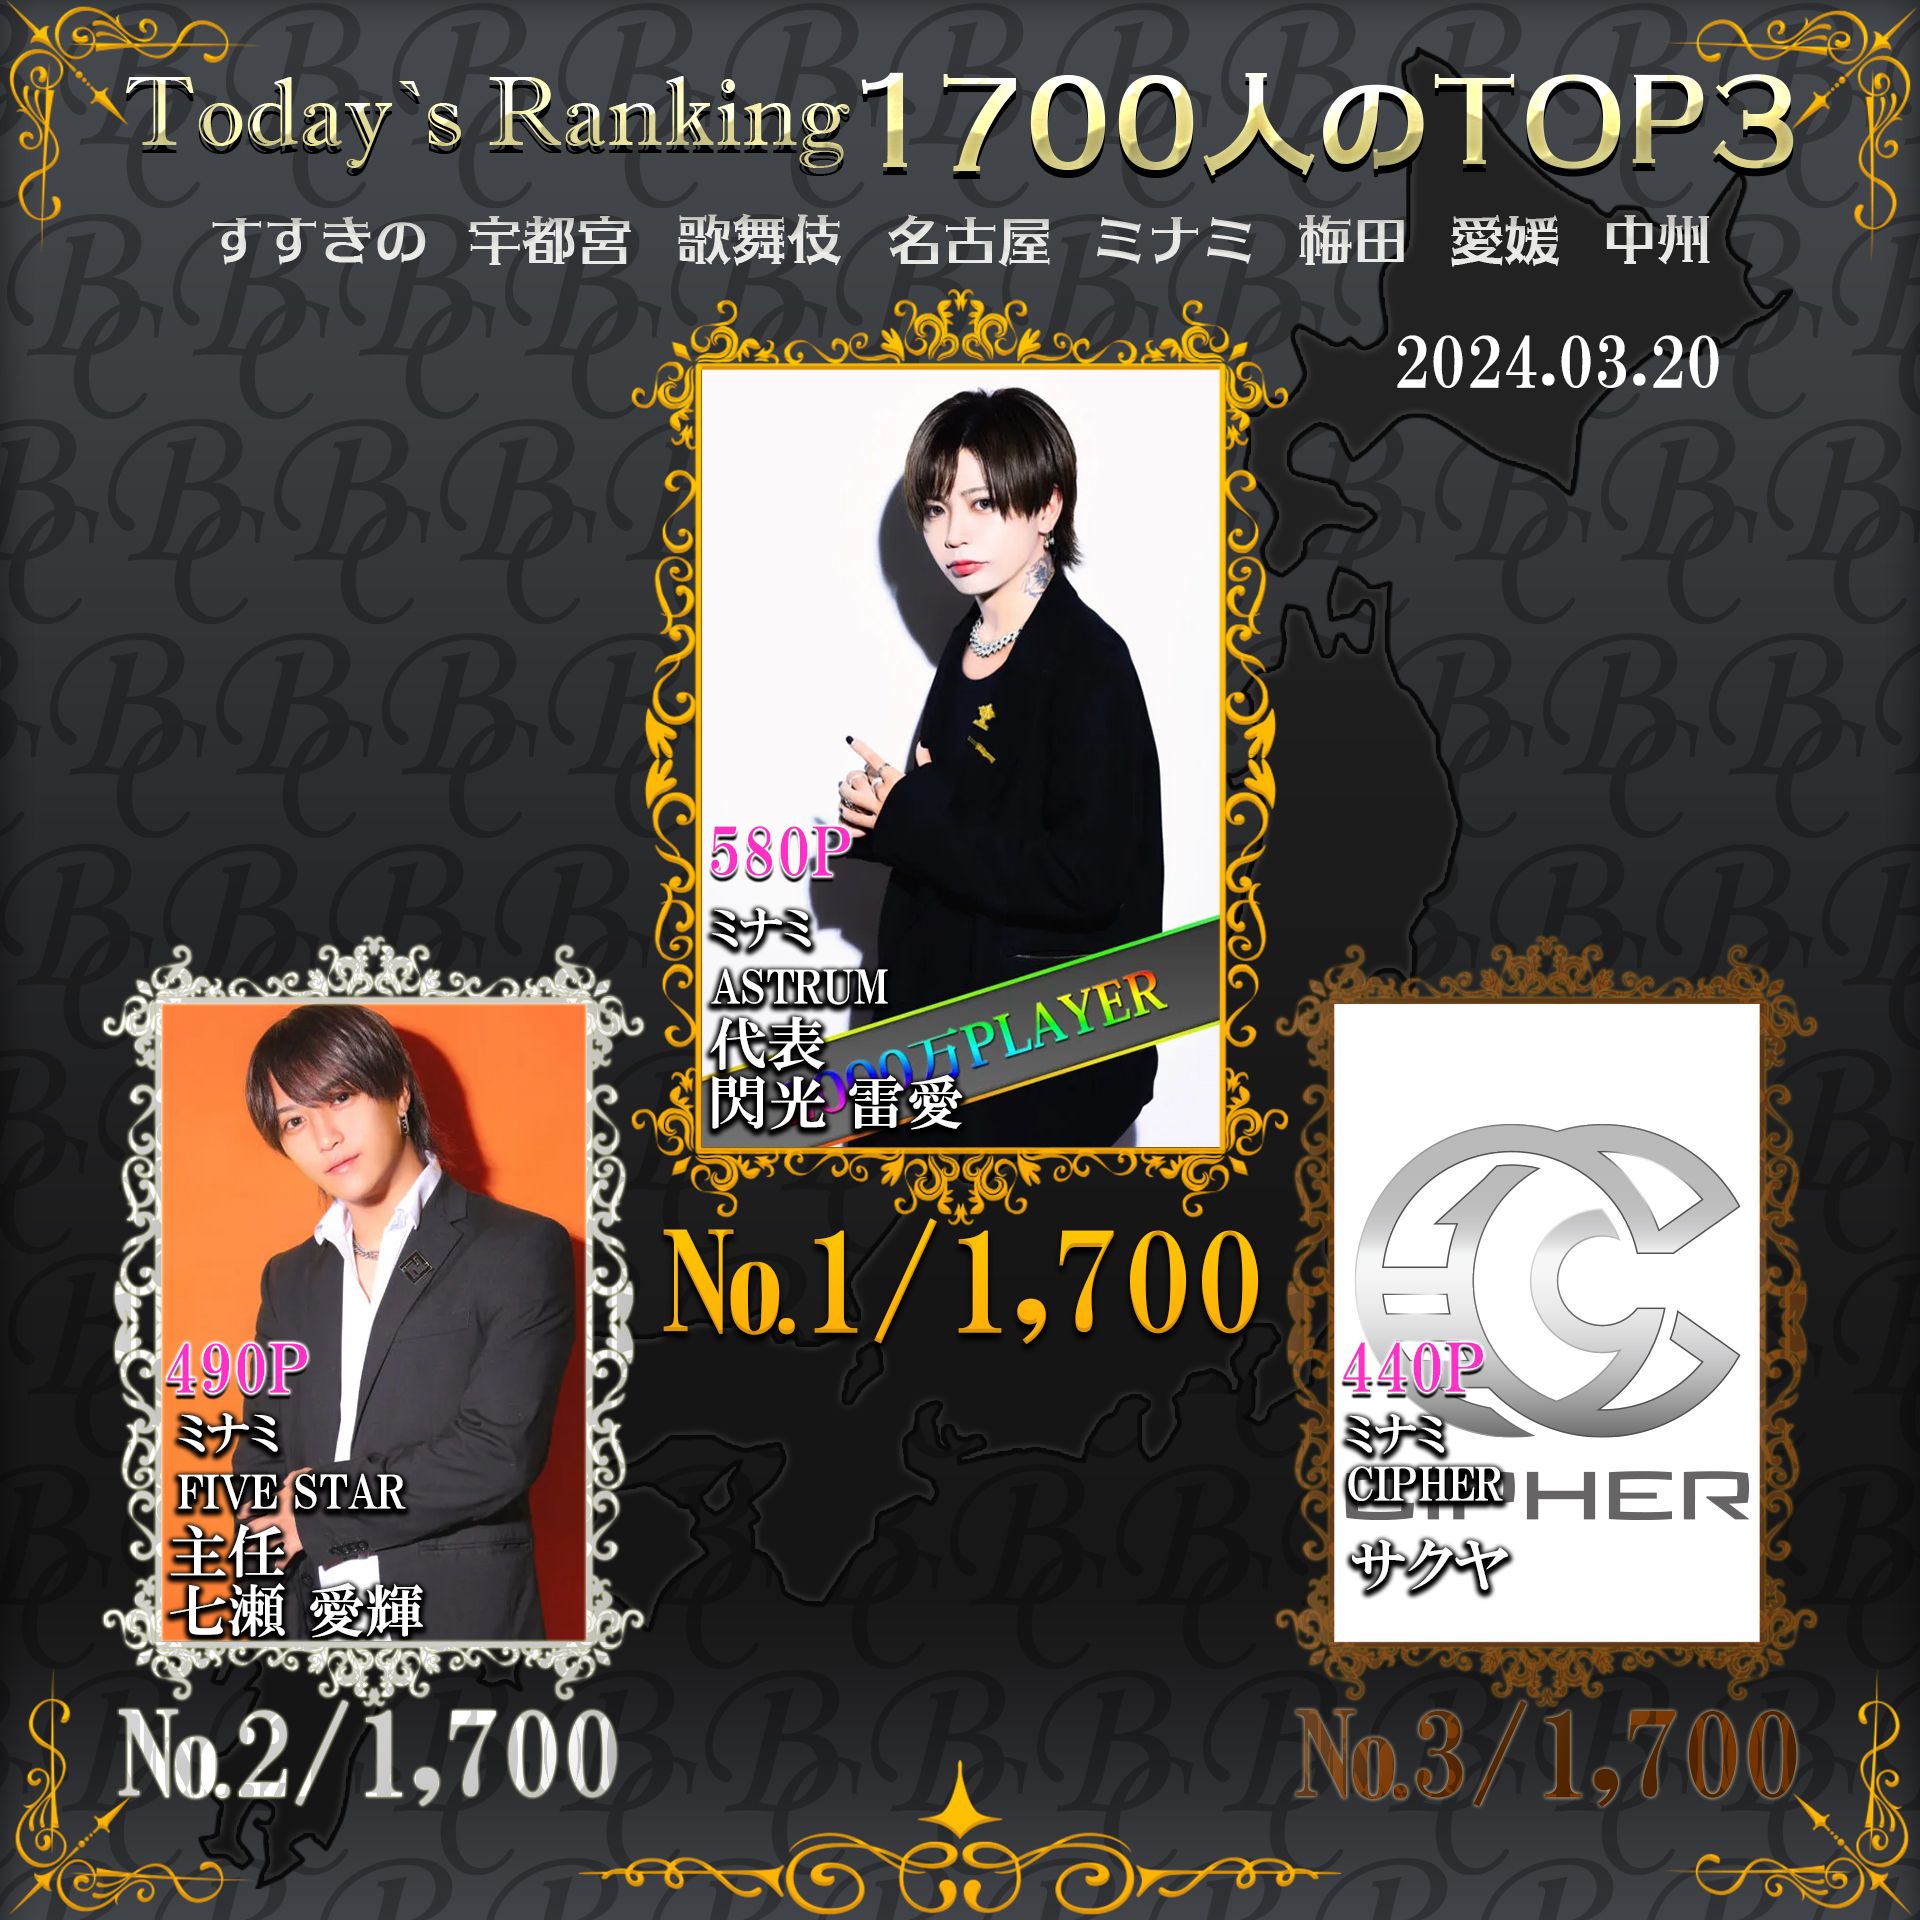 3/20 Today’s Ranking